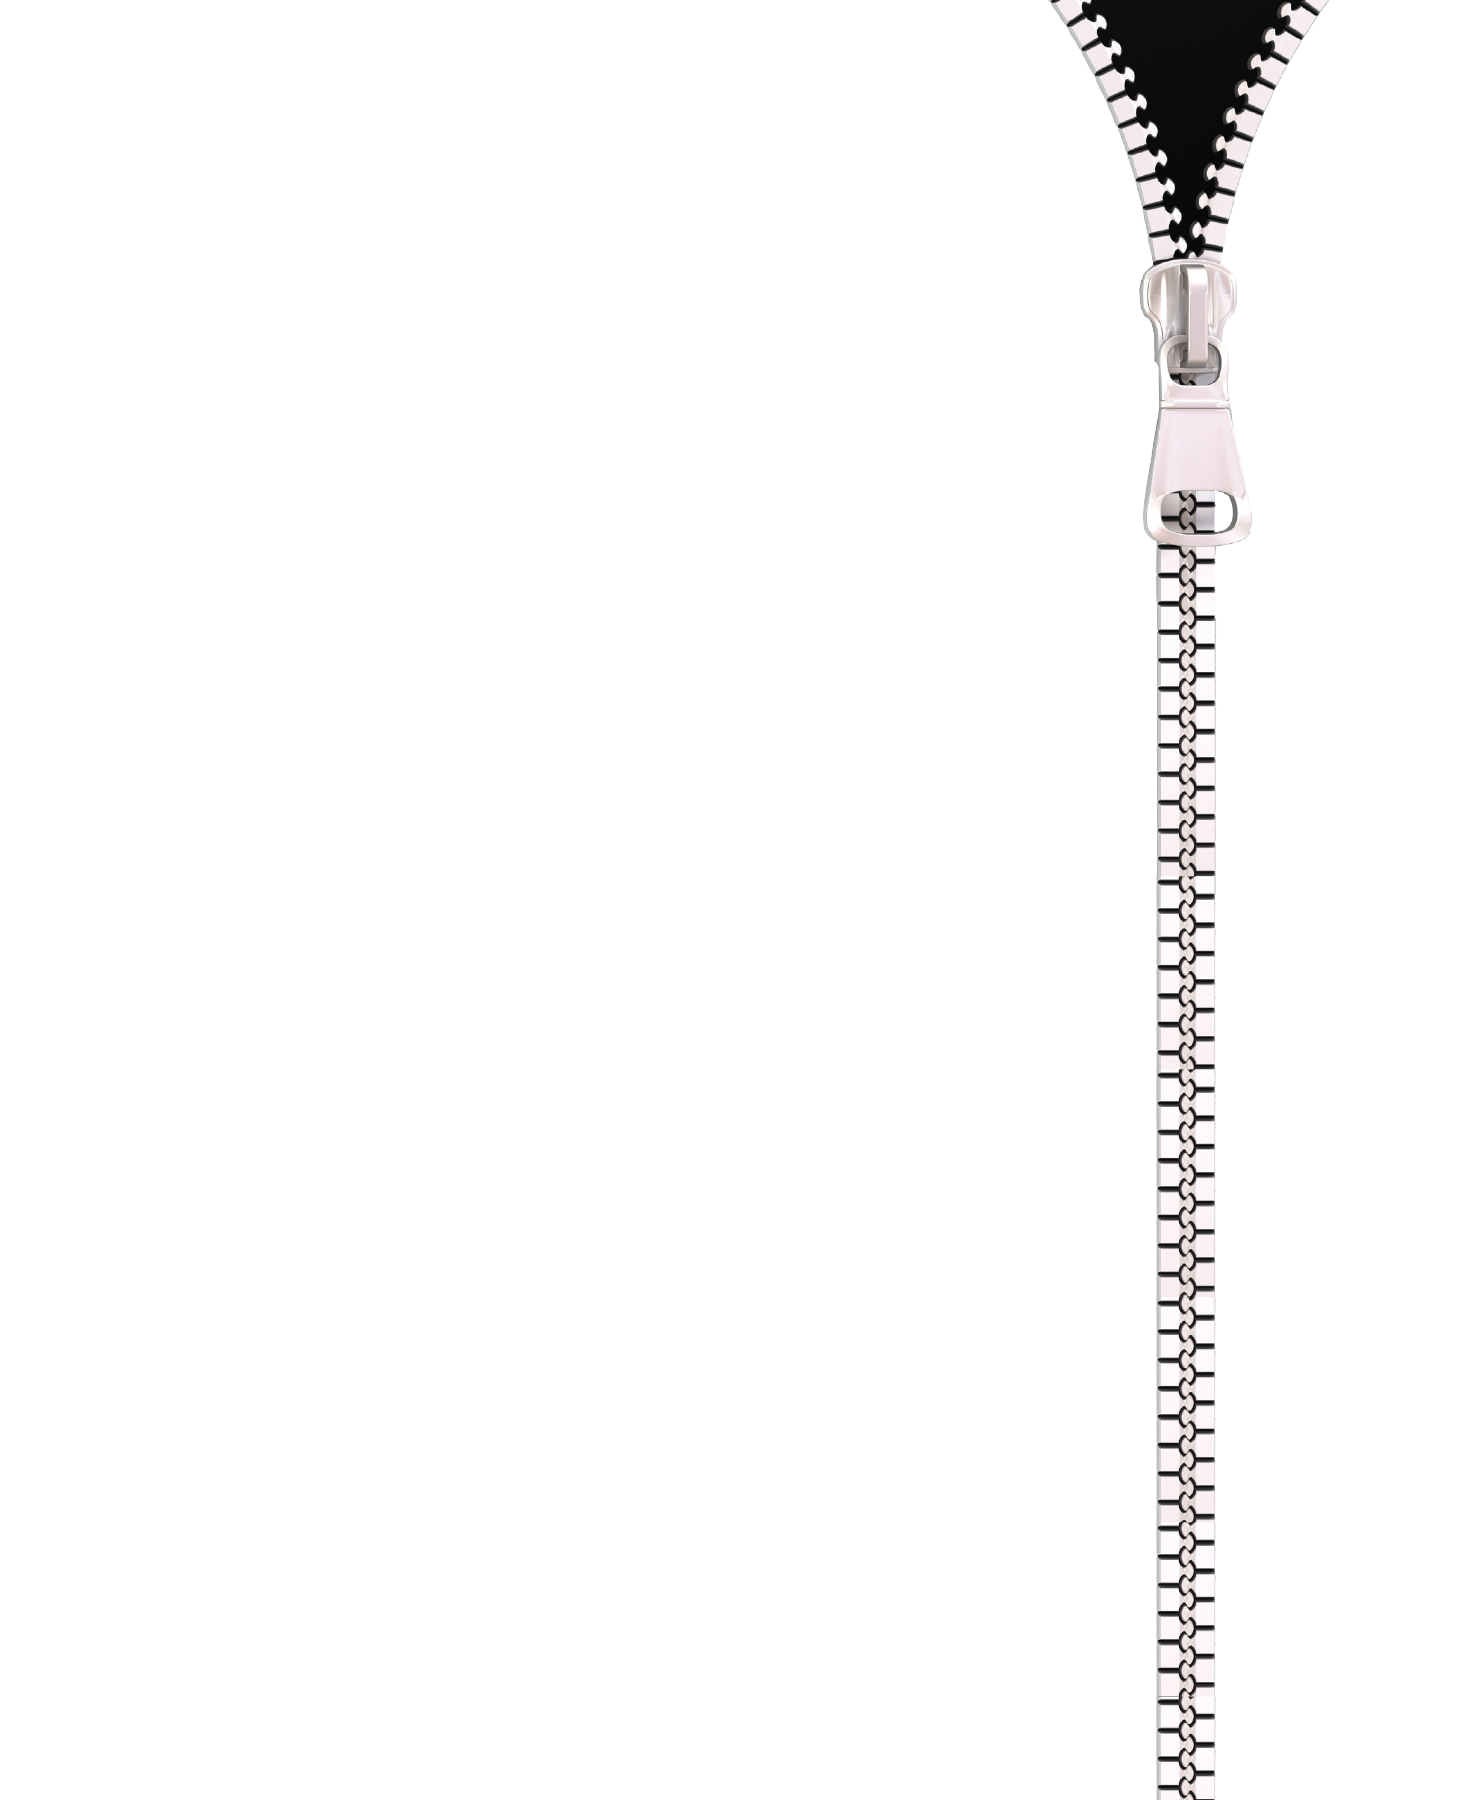 Long Vertical Zipper Size PNG Transparent Background, Free